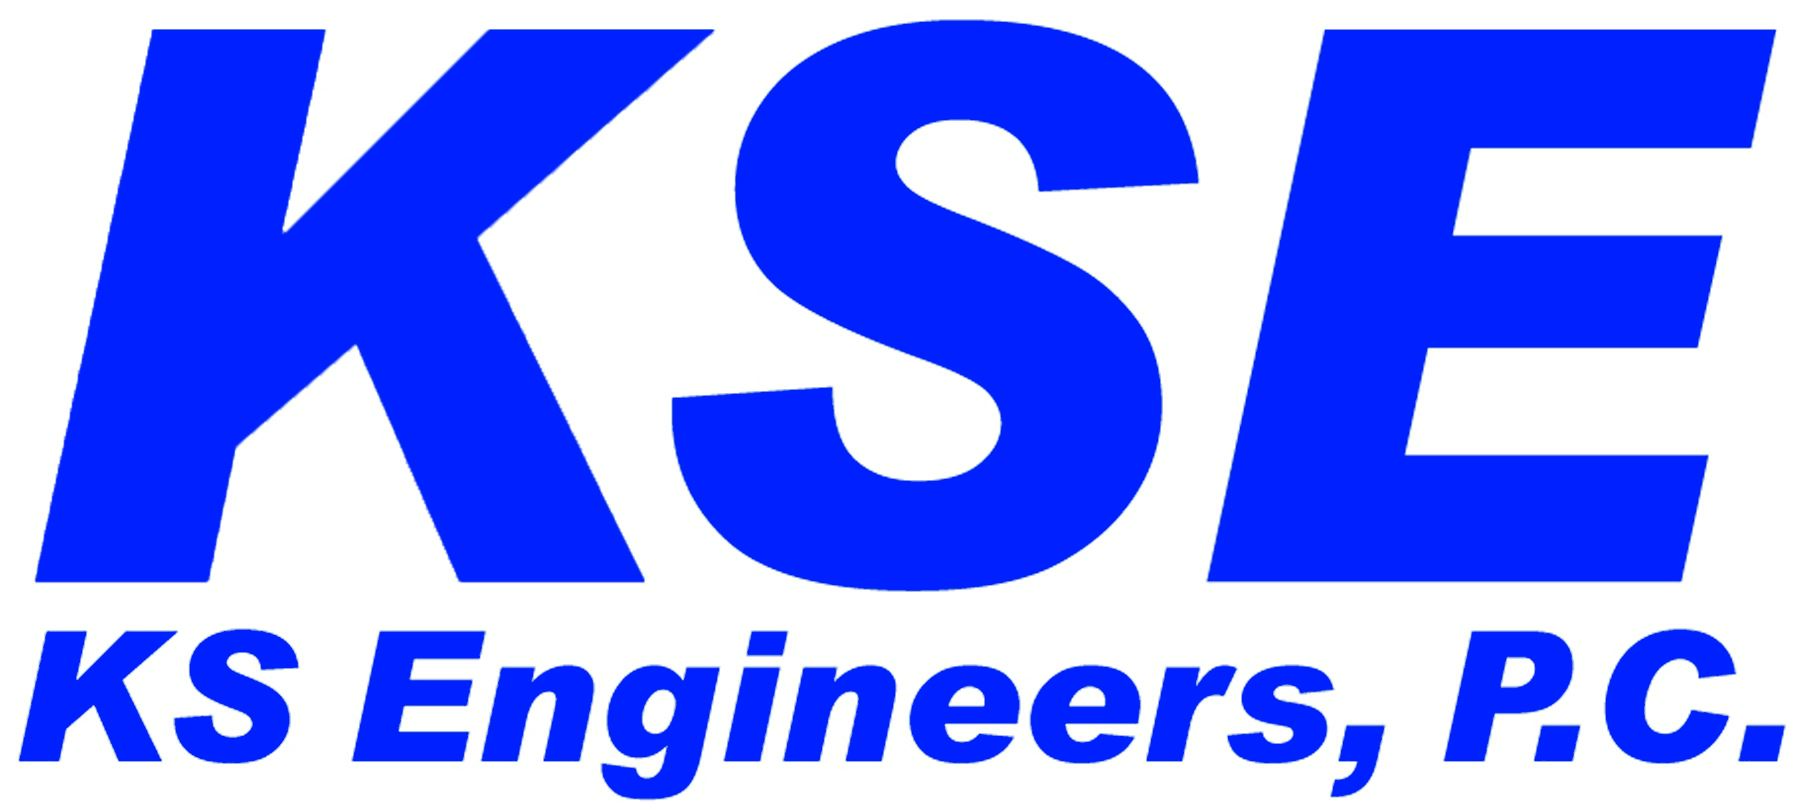 KS Engineers, P.C. logo